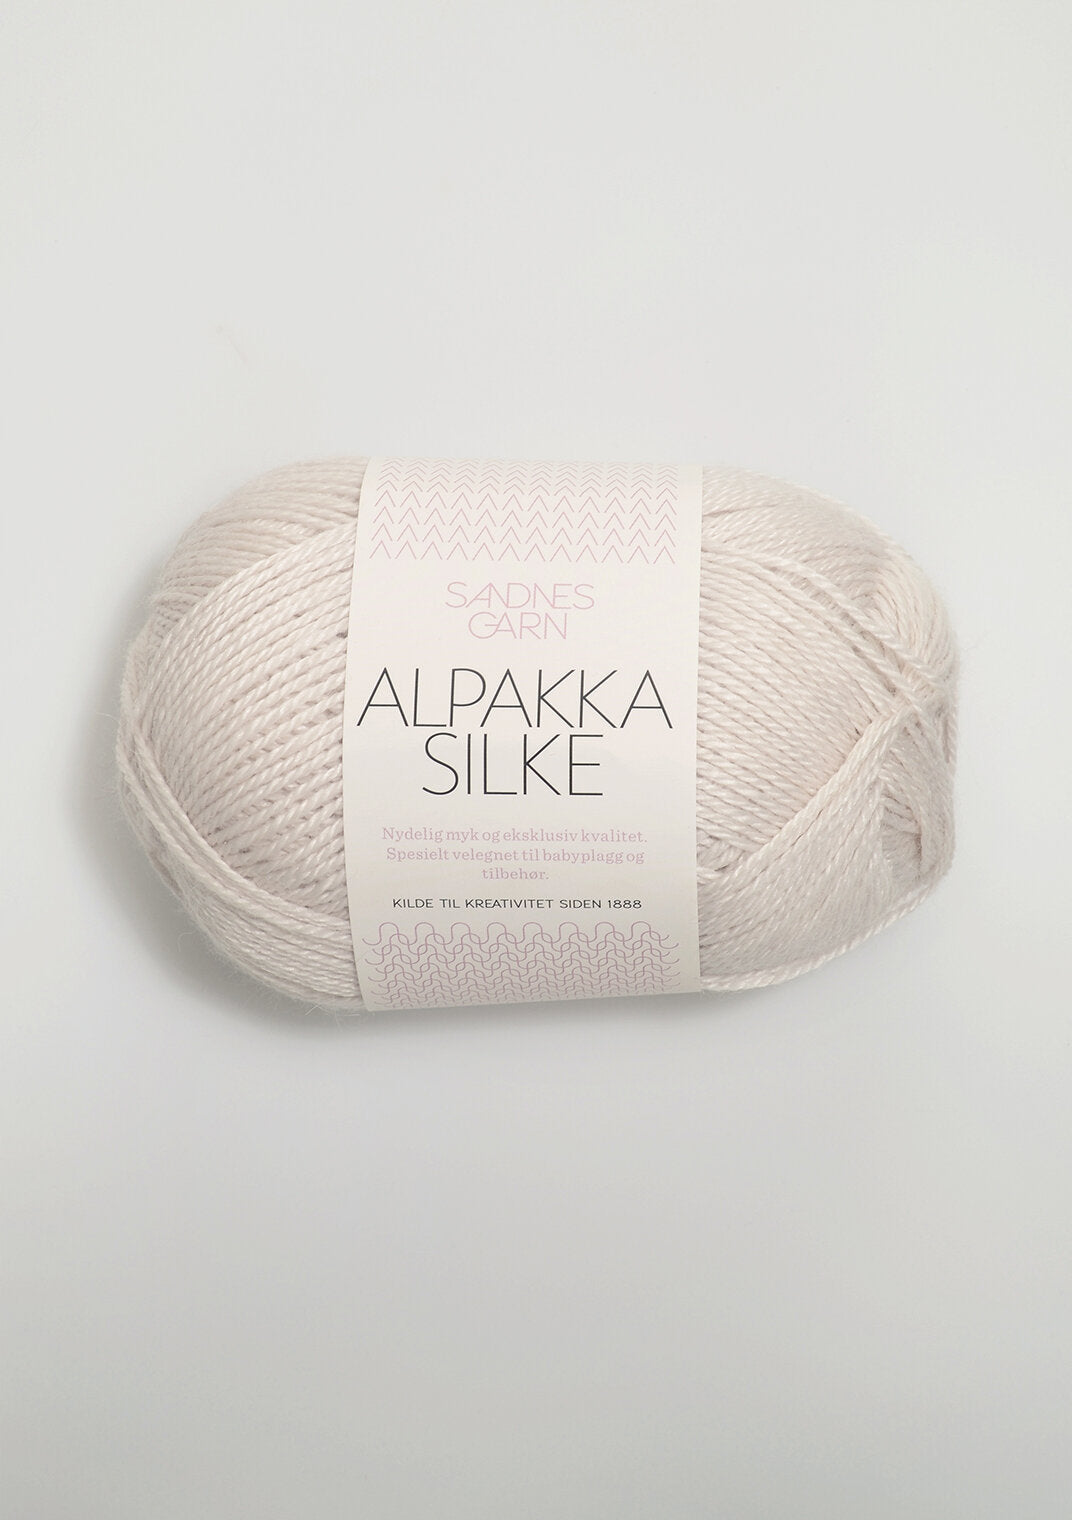 sandnes garn alpakka silke yarn 50g kitt 1015